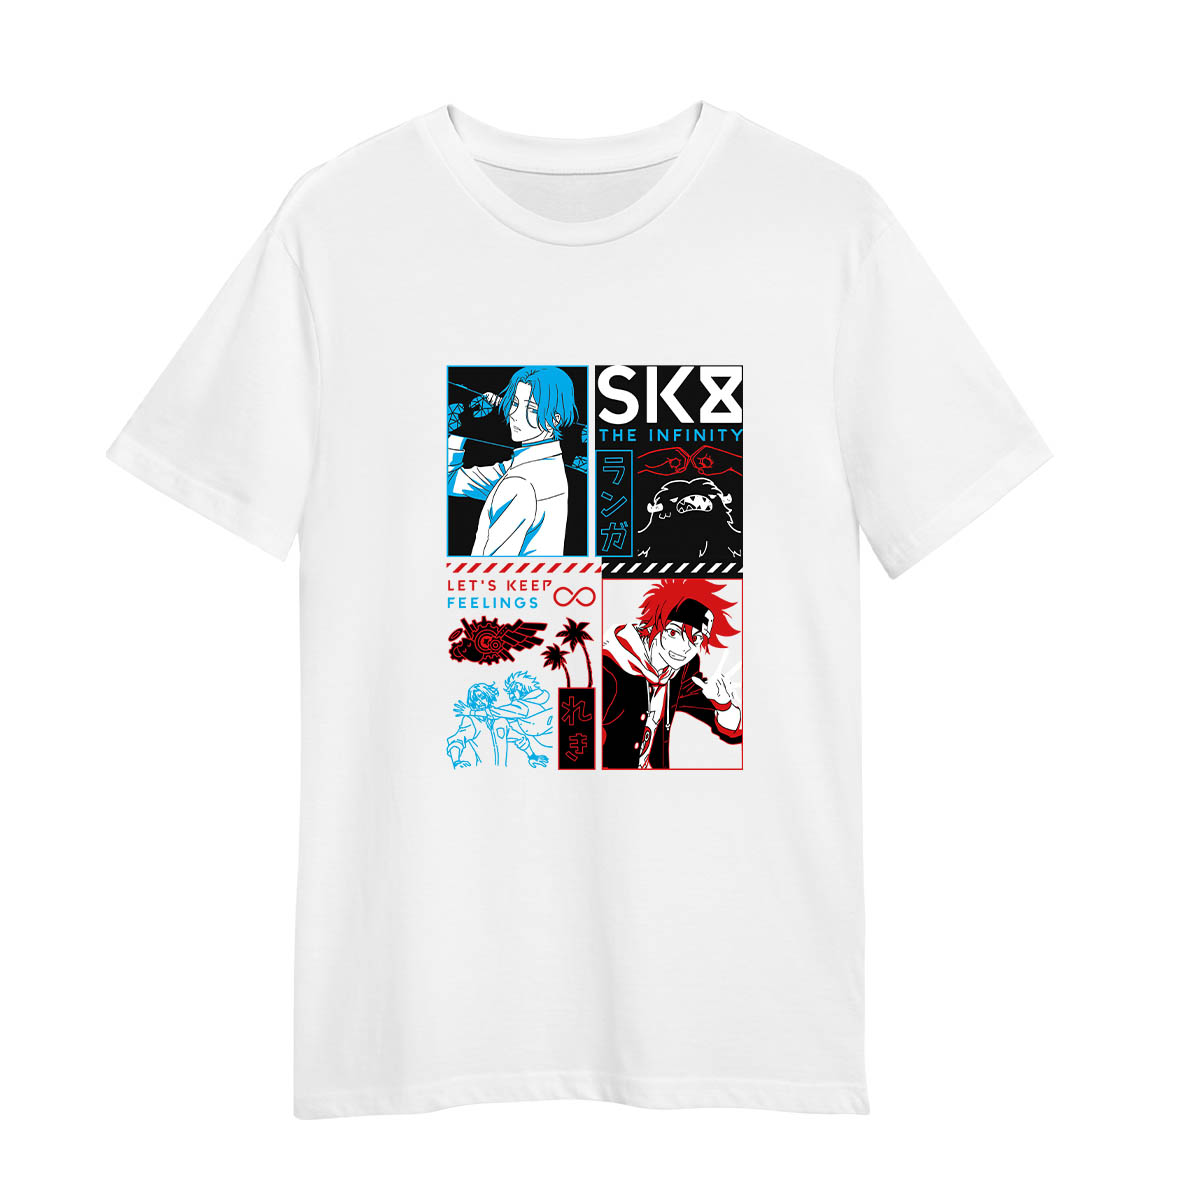 SK8 The Infinity Let's Keep Feelings Japanese Anime Manga Adult Unisex White T-shirt